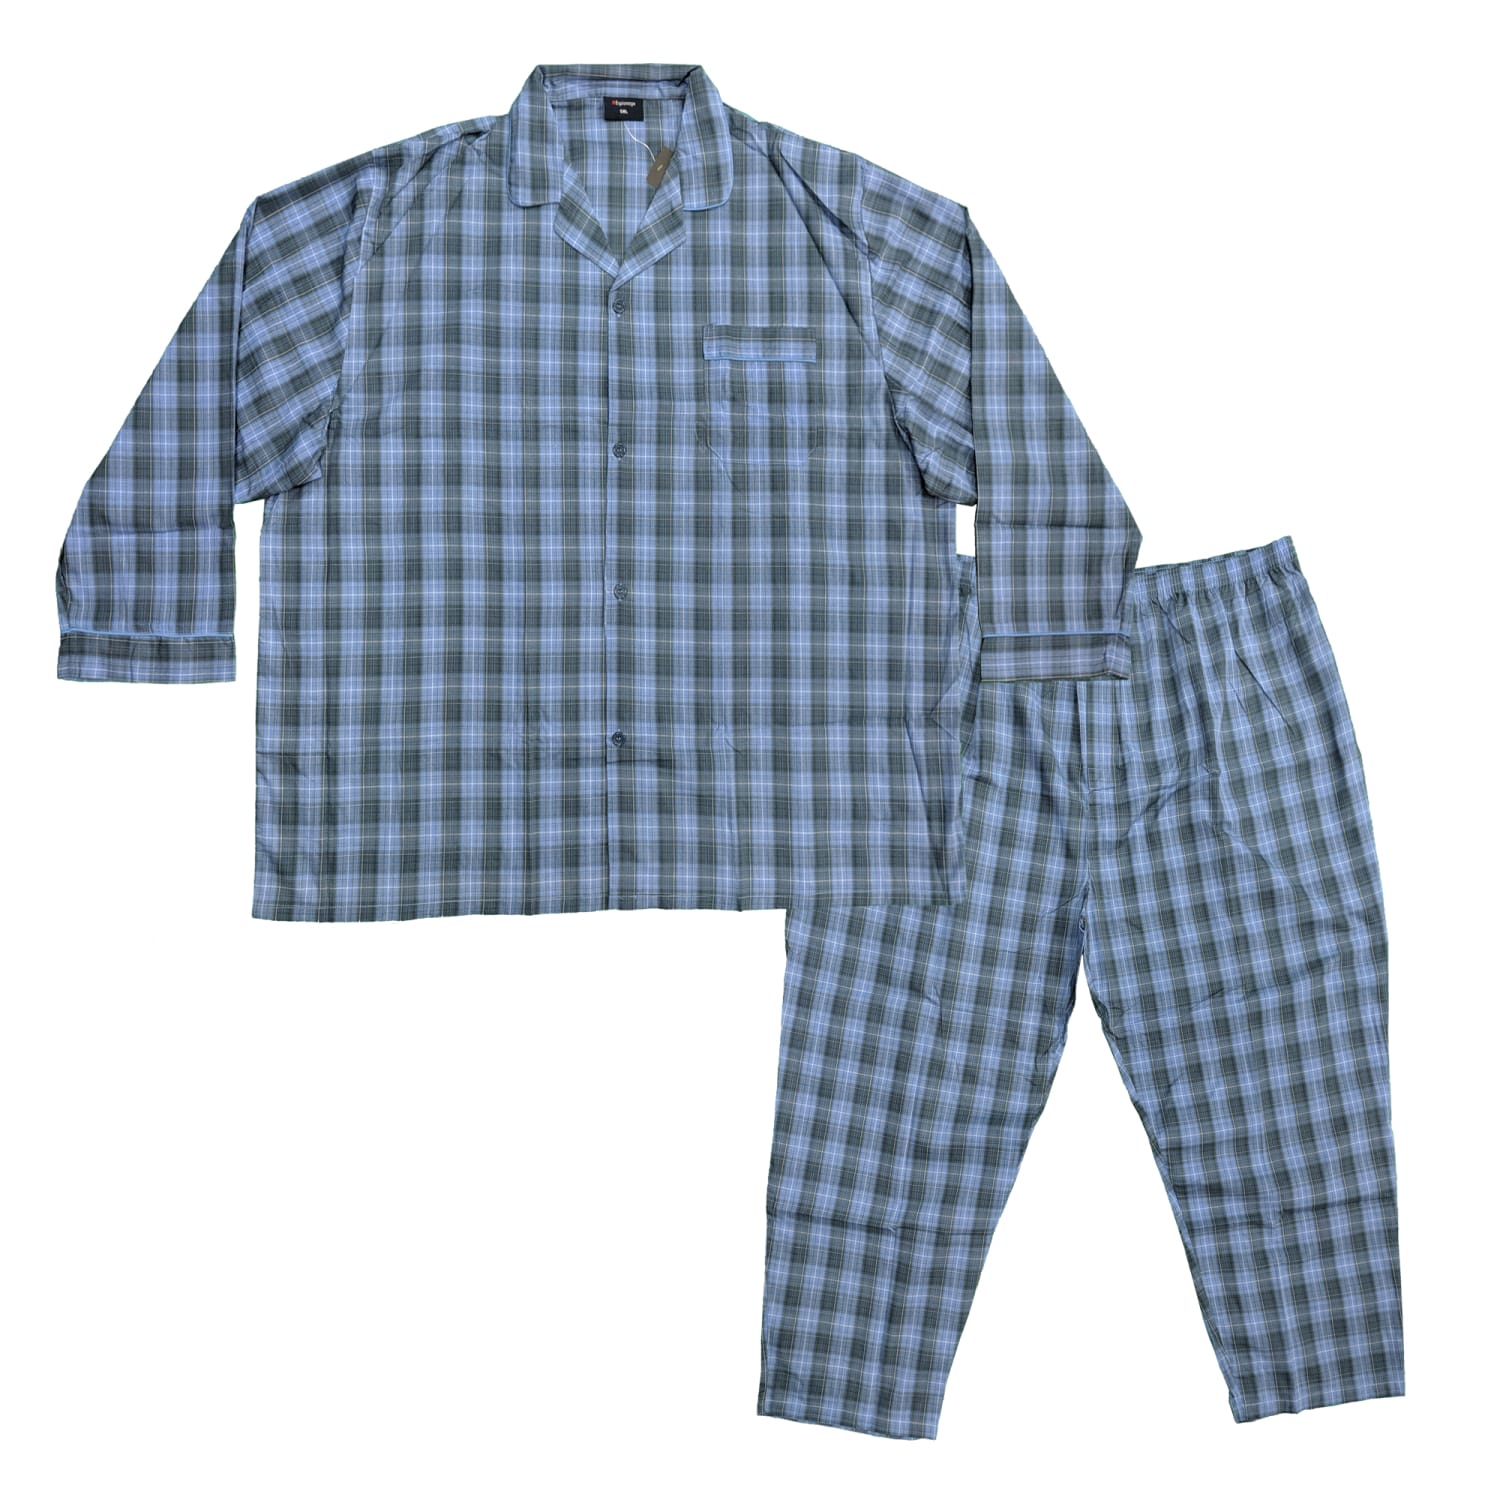 Espionage PJs (Shirt & Trousers) - PJ020 - Blue Check 1